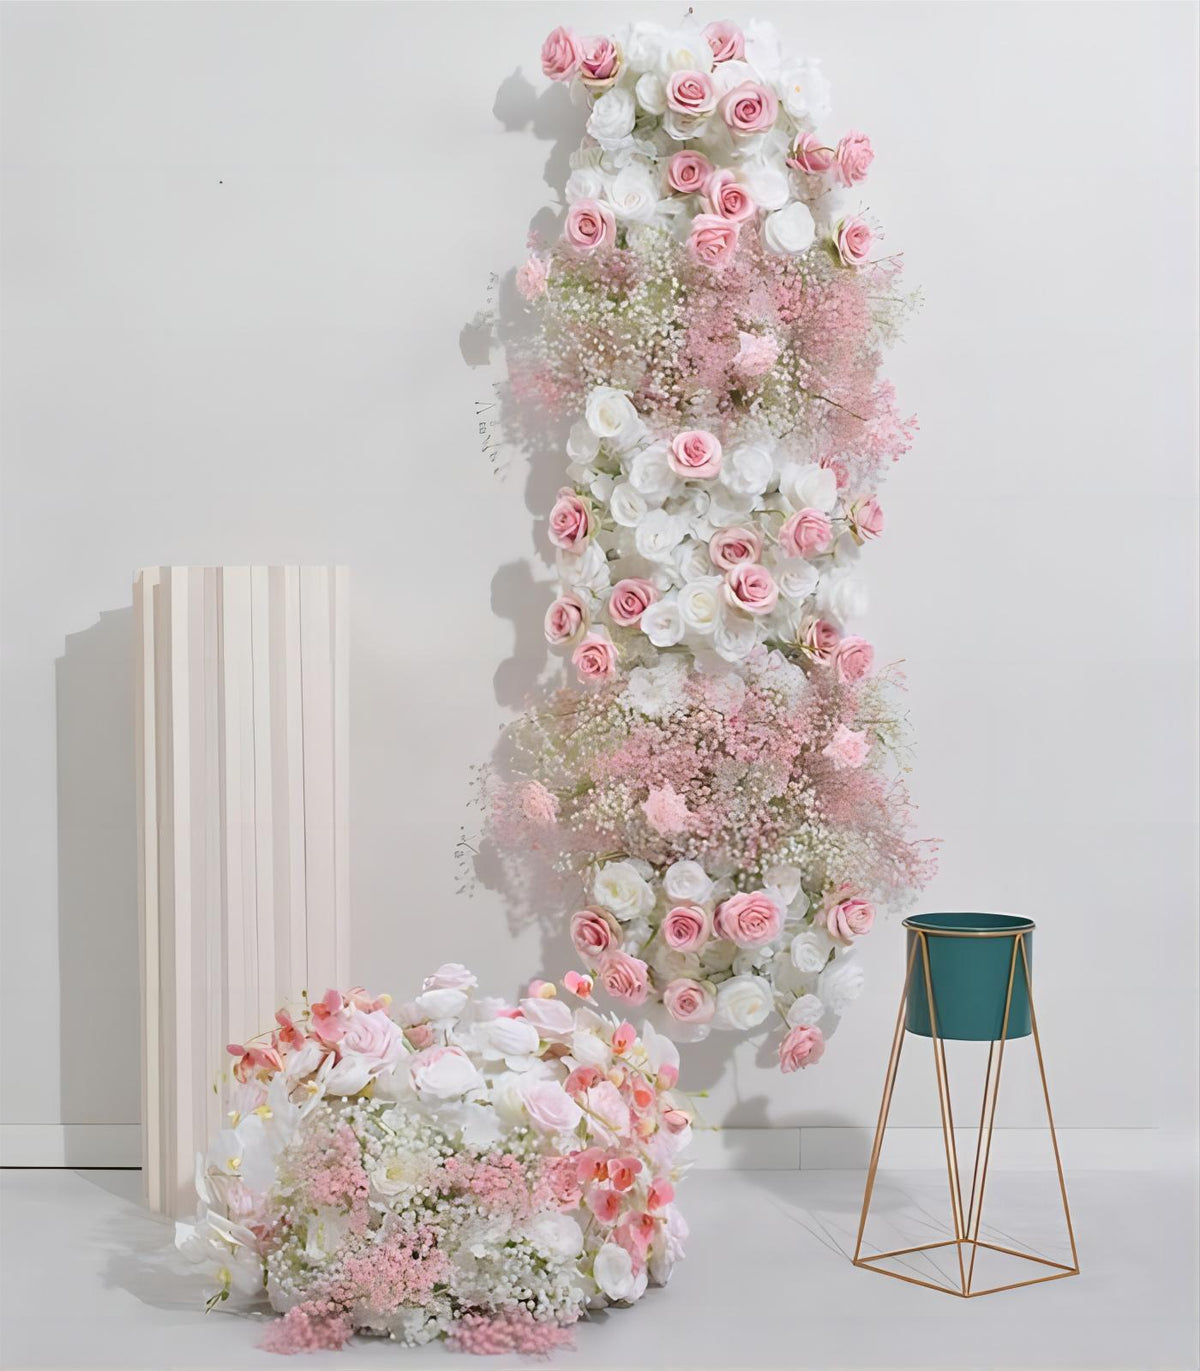 160*50cm Pink White Rose Babysbreath Artificial Flower Wedding Party Birthday Backdrop Decor CH9293